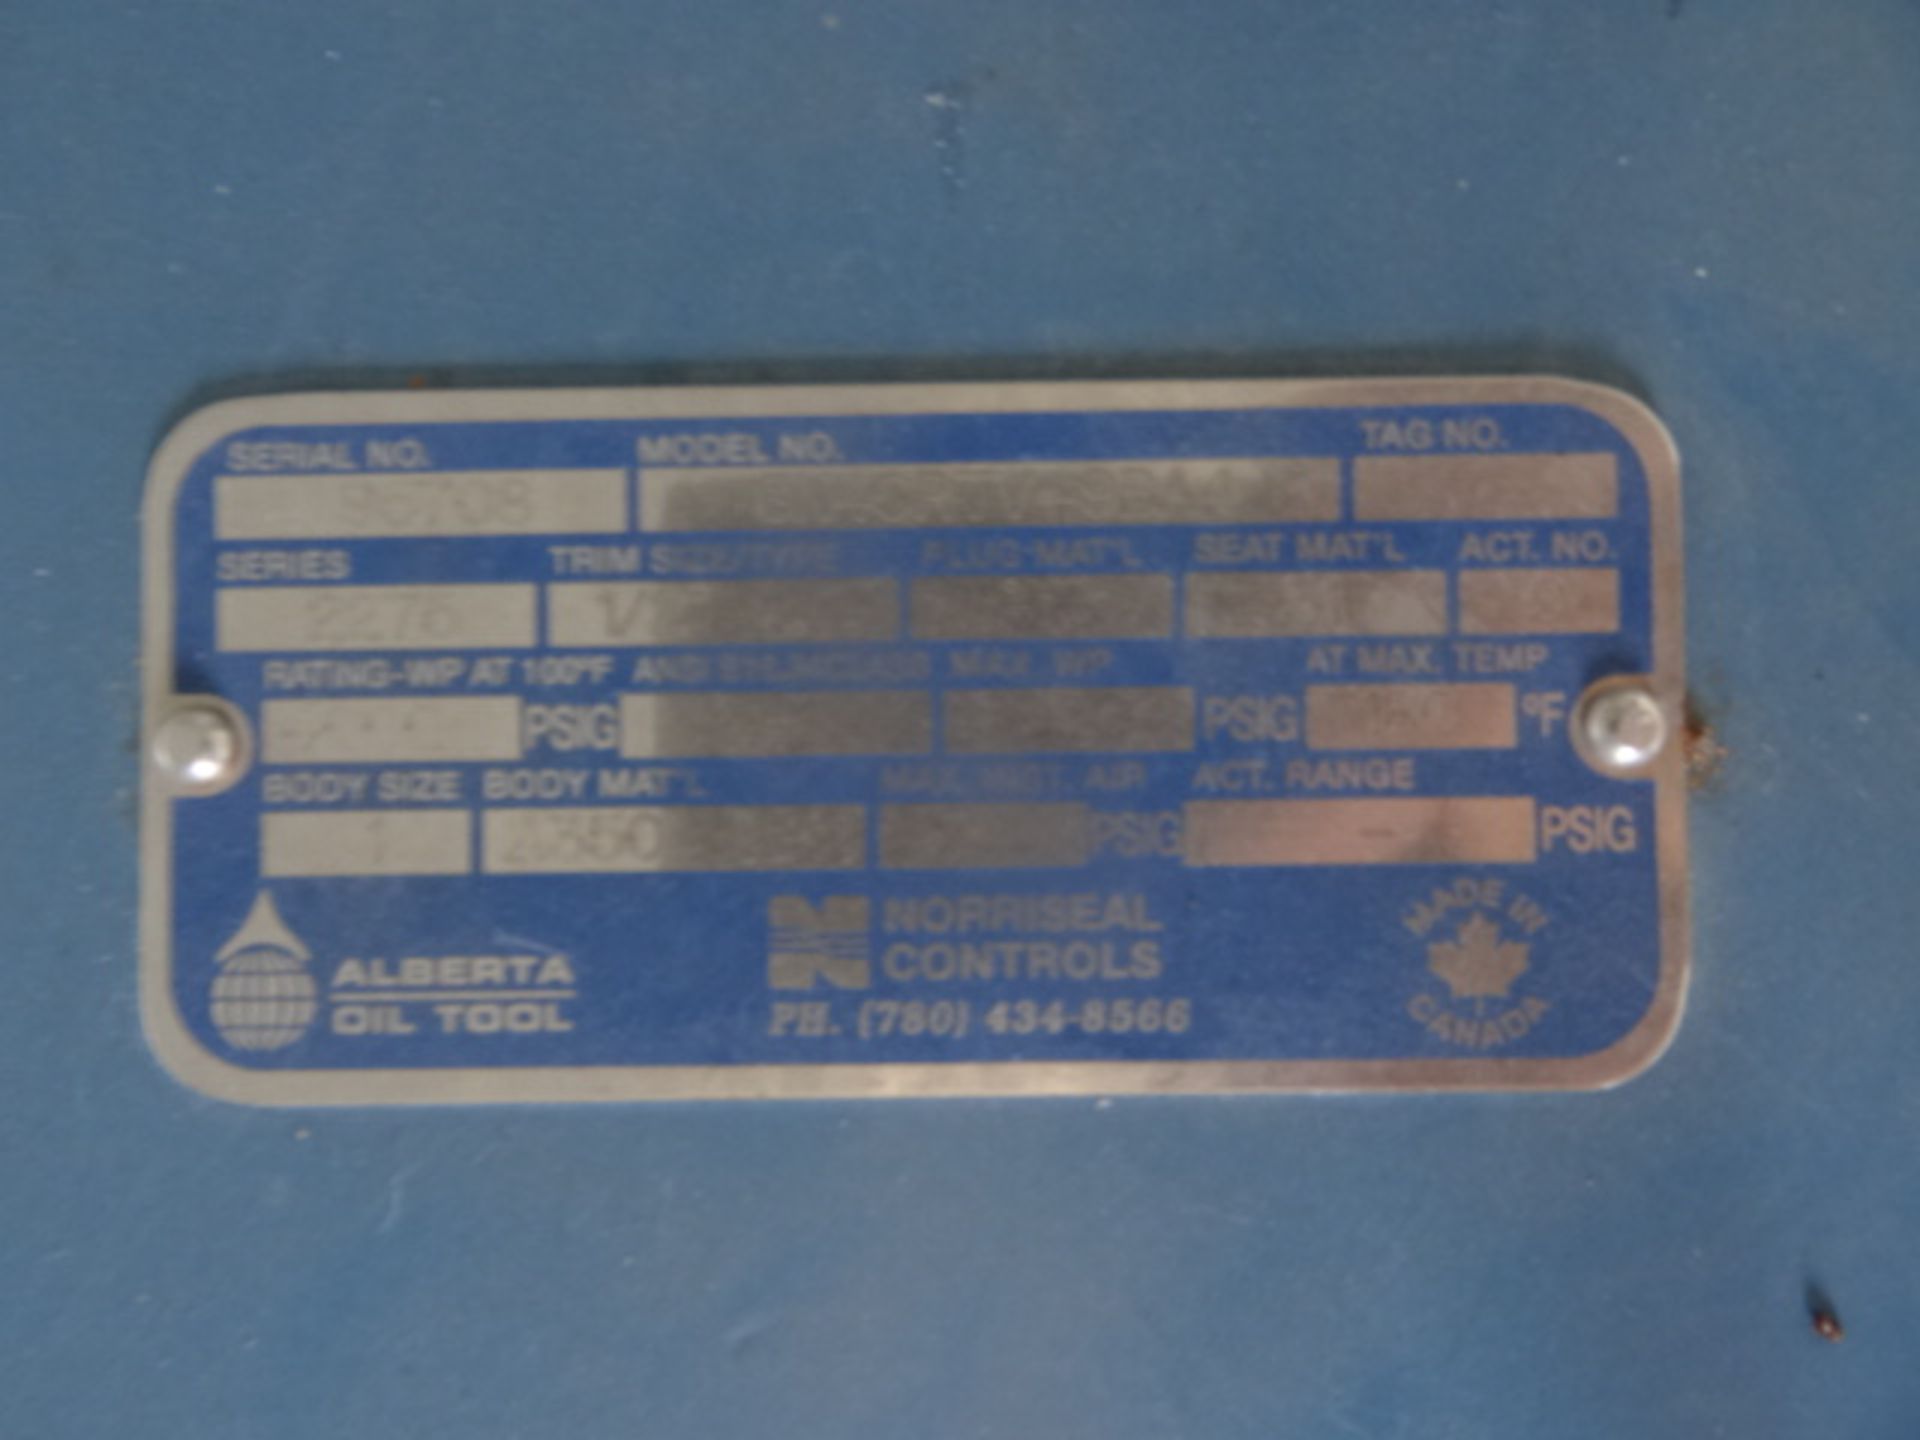 2004 Enerflex LP Compression Blowcase Package, MAWP 375 Blowcase, Cata-Dyne Gas Heater - Image 7 of 10